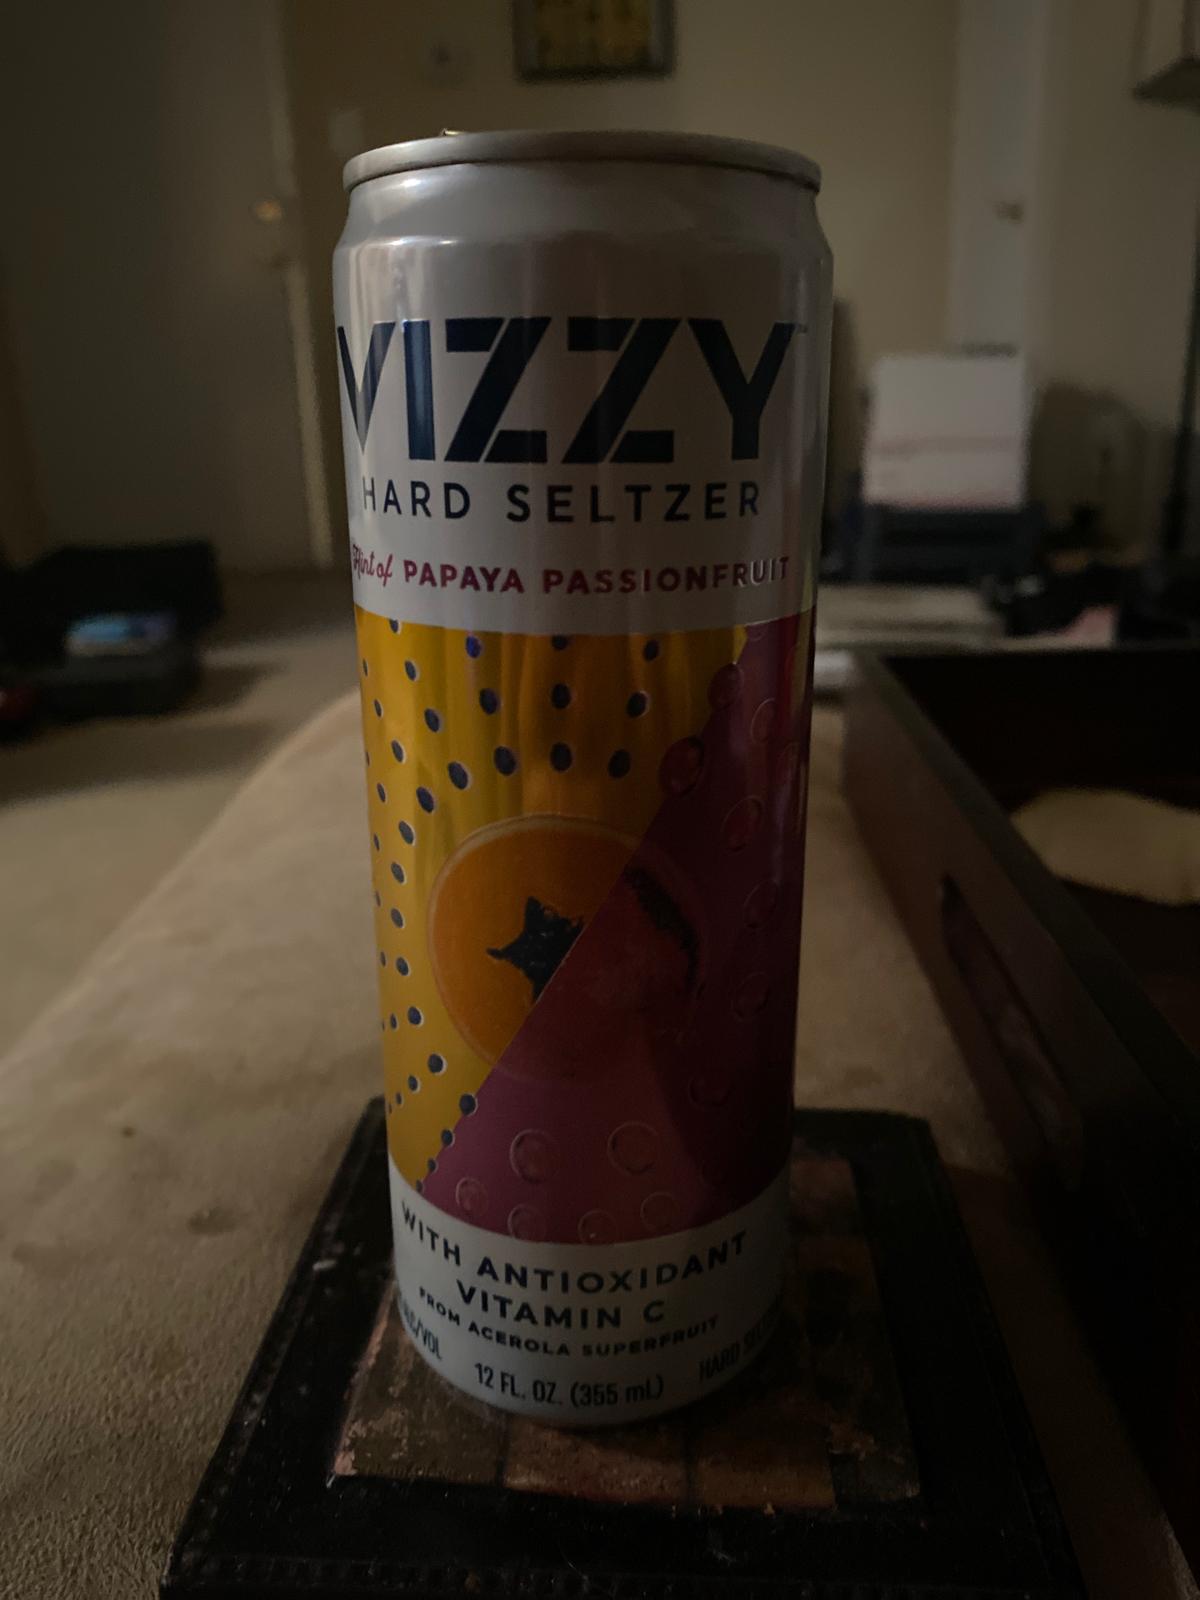 Vizzy - Papaya Passionfruit